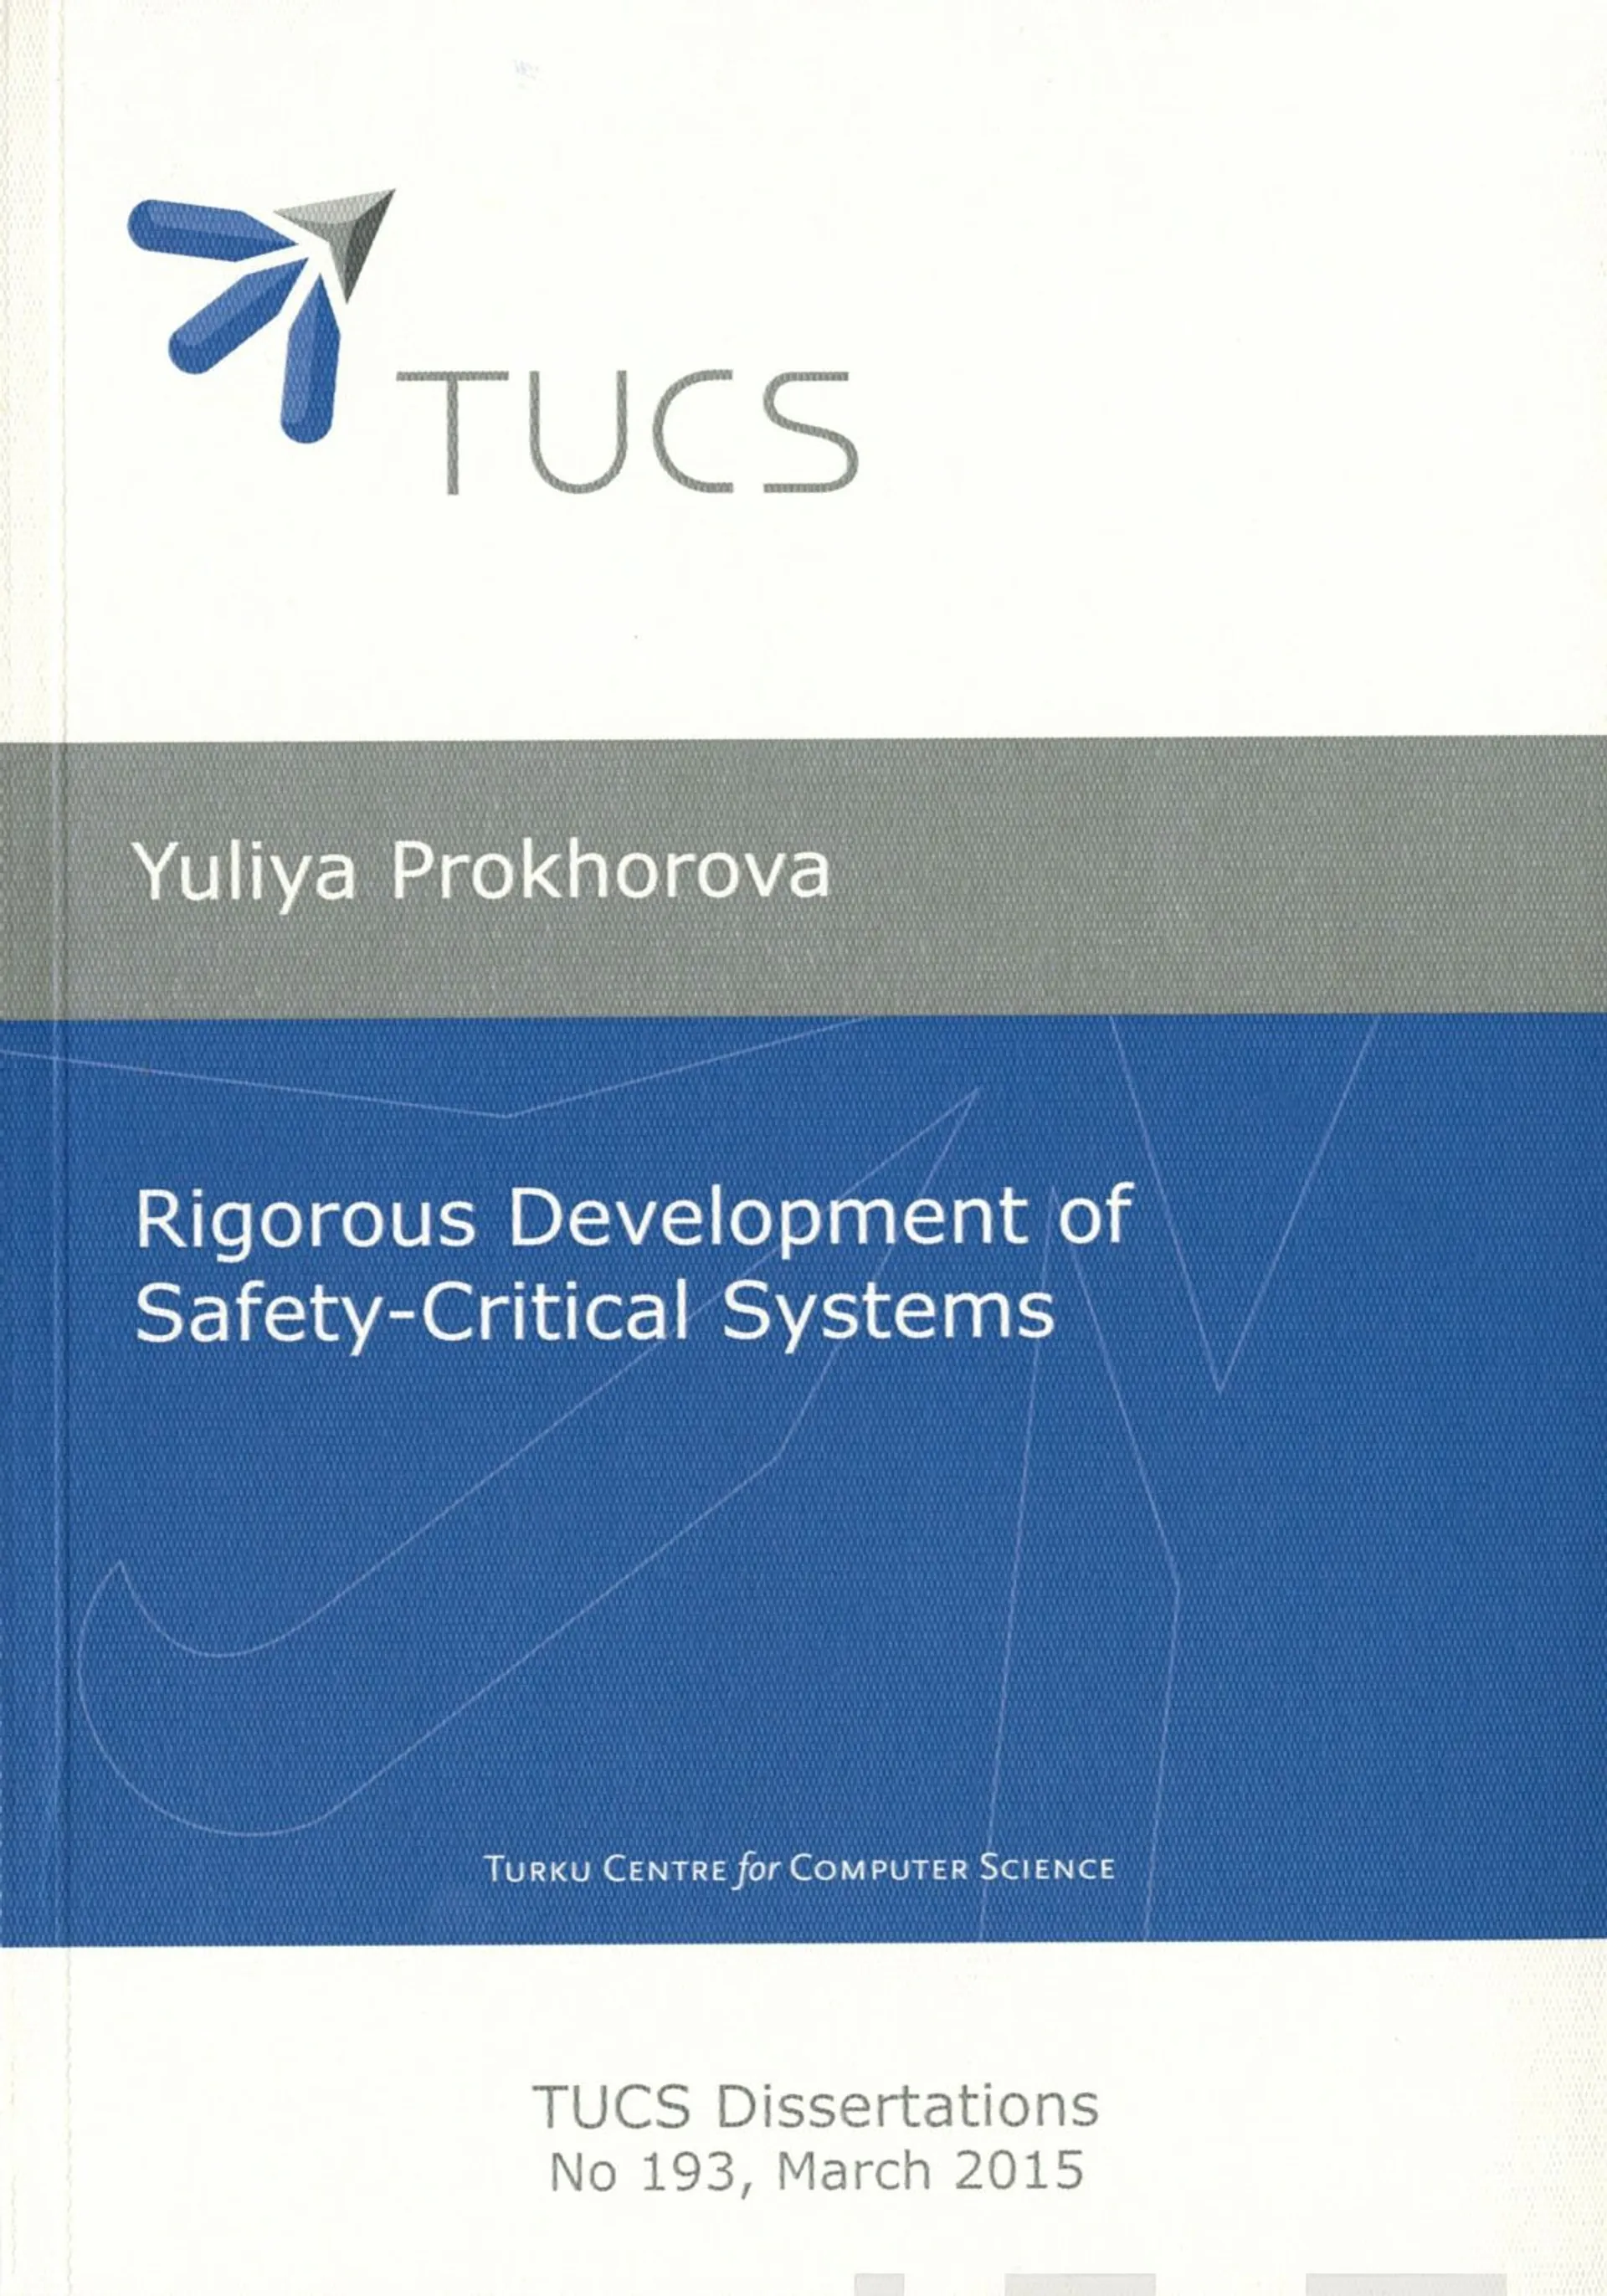 Prokhorova, Rigorous Development of Safety-Critical Systems